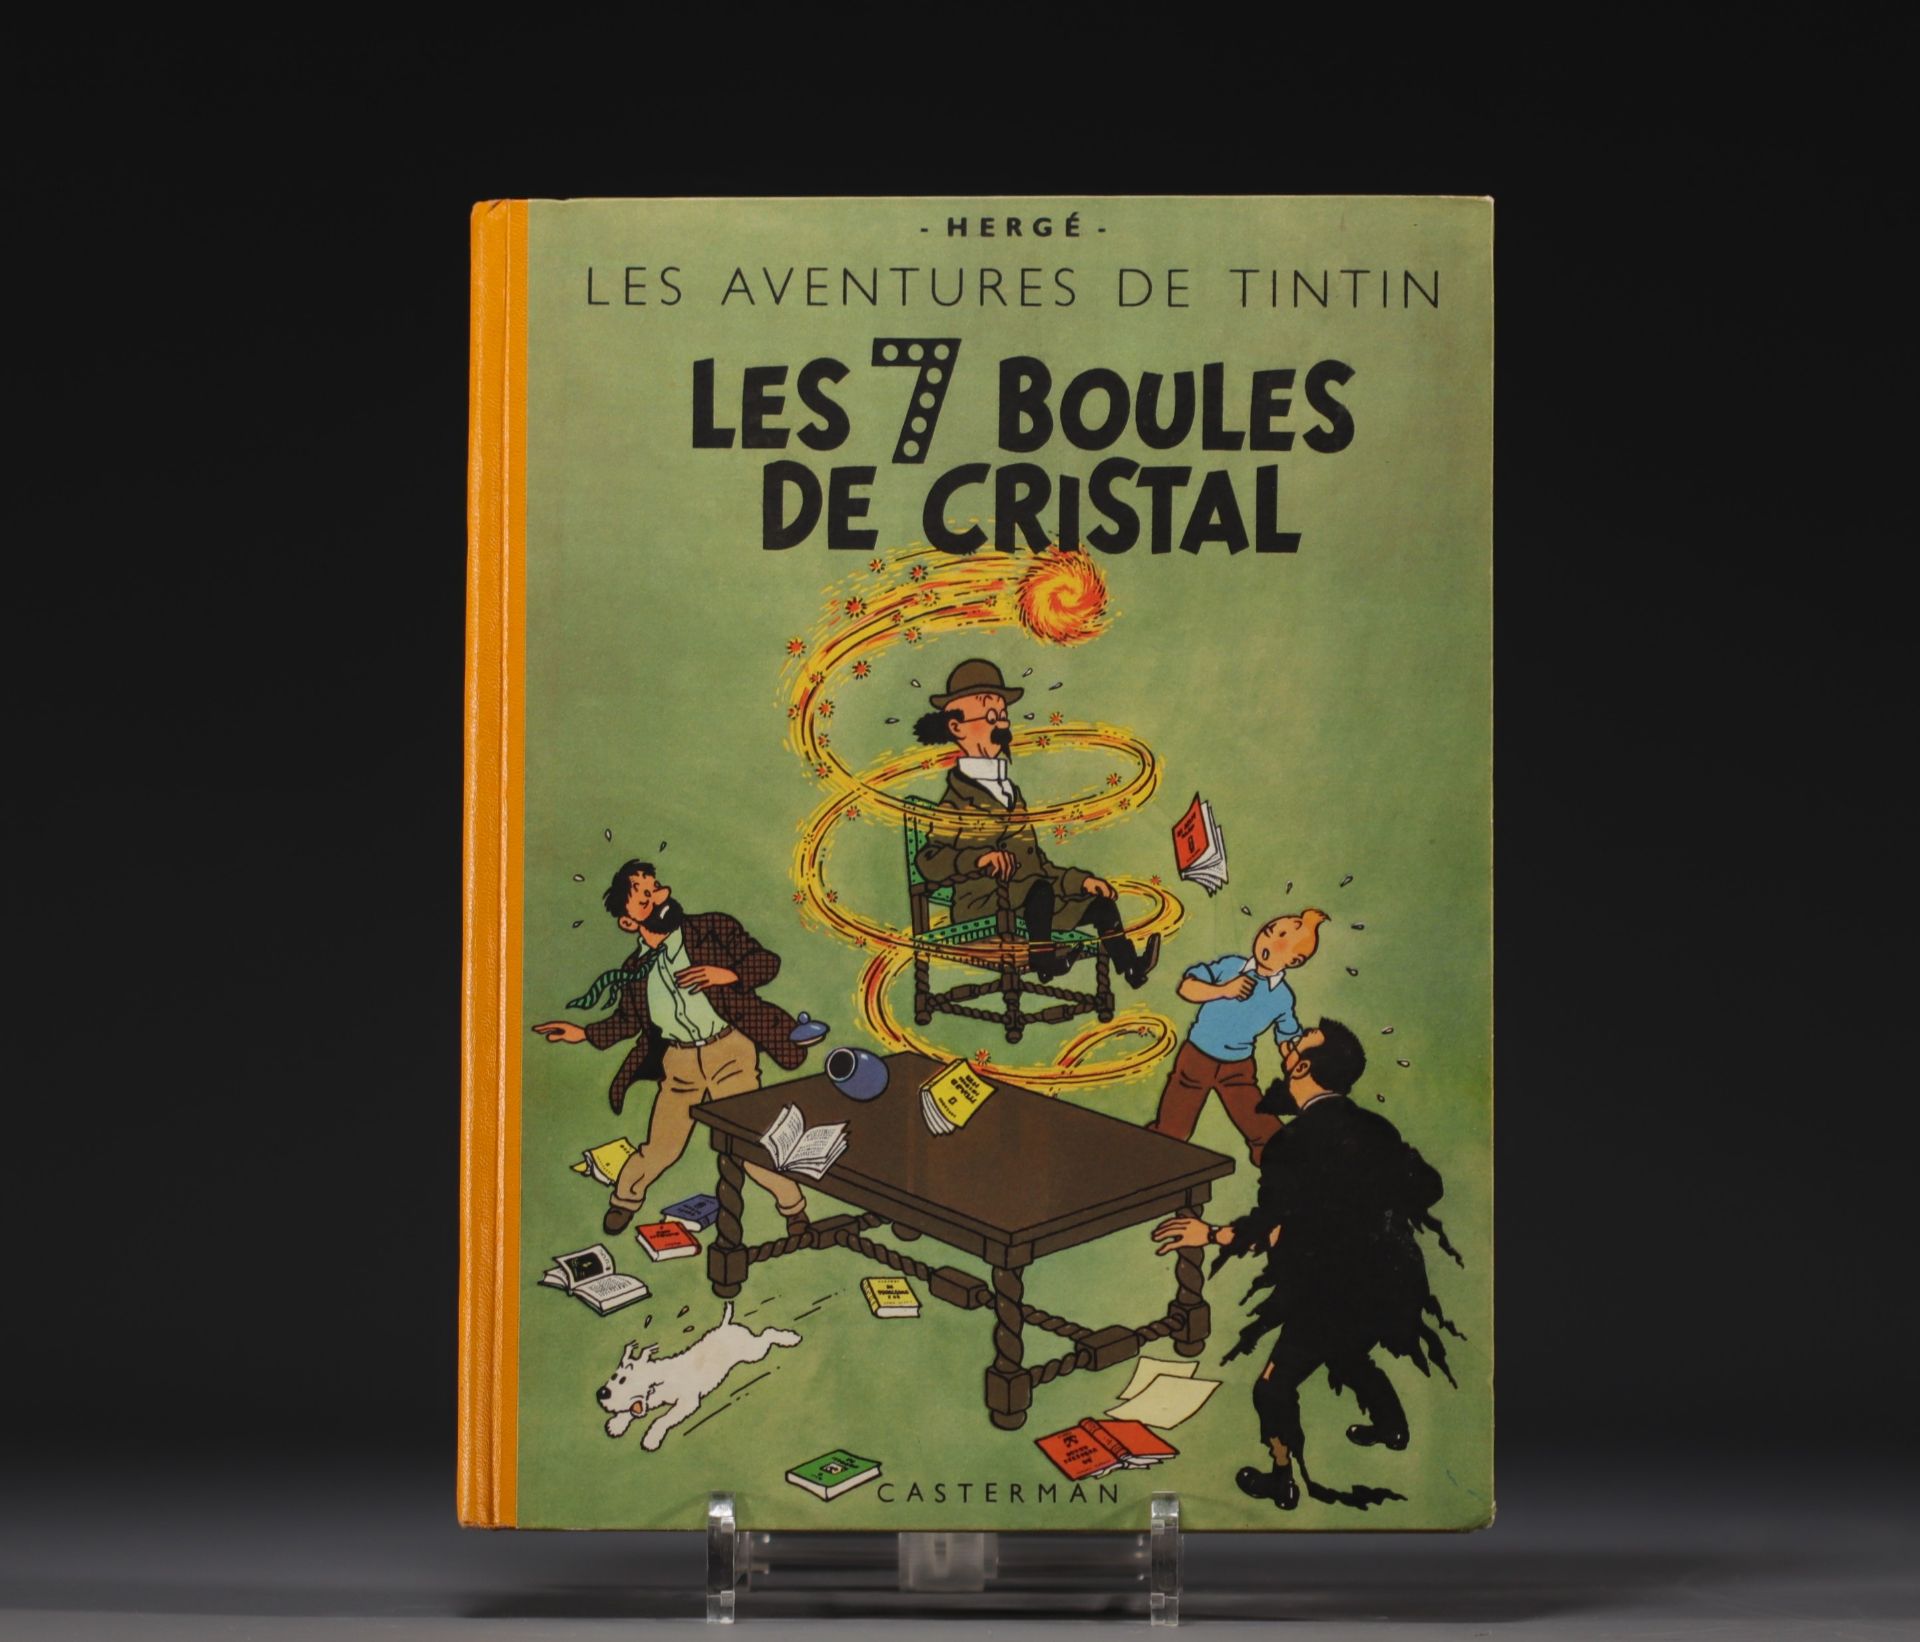 Tintin - "The 7 crystal balls" album, 1948 edition.